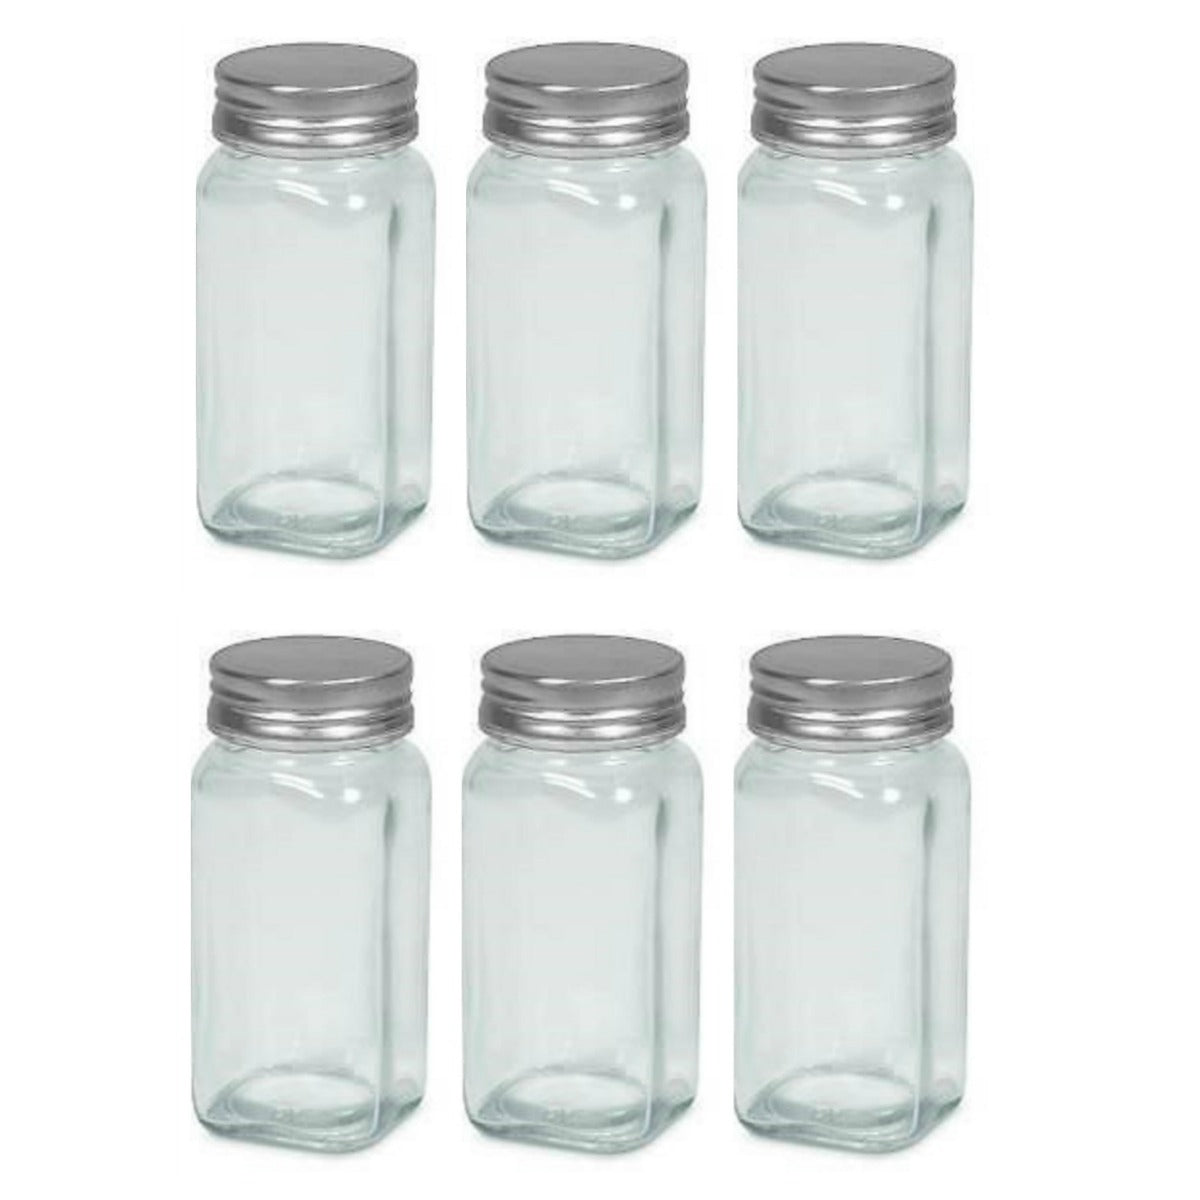 RSVP Square Glass Spice Jar - Set of 6 